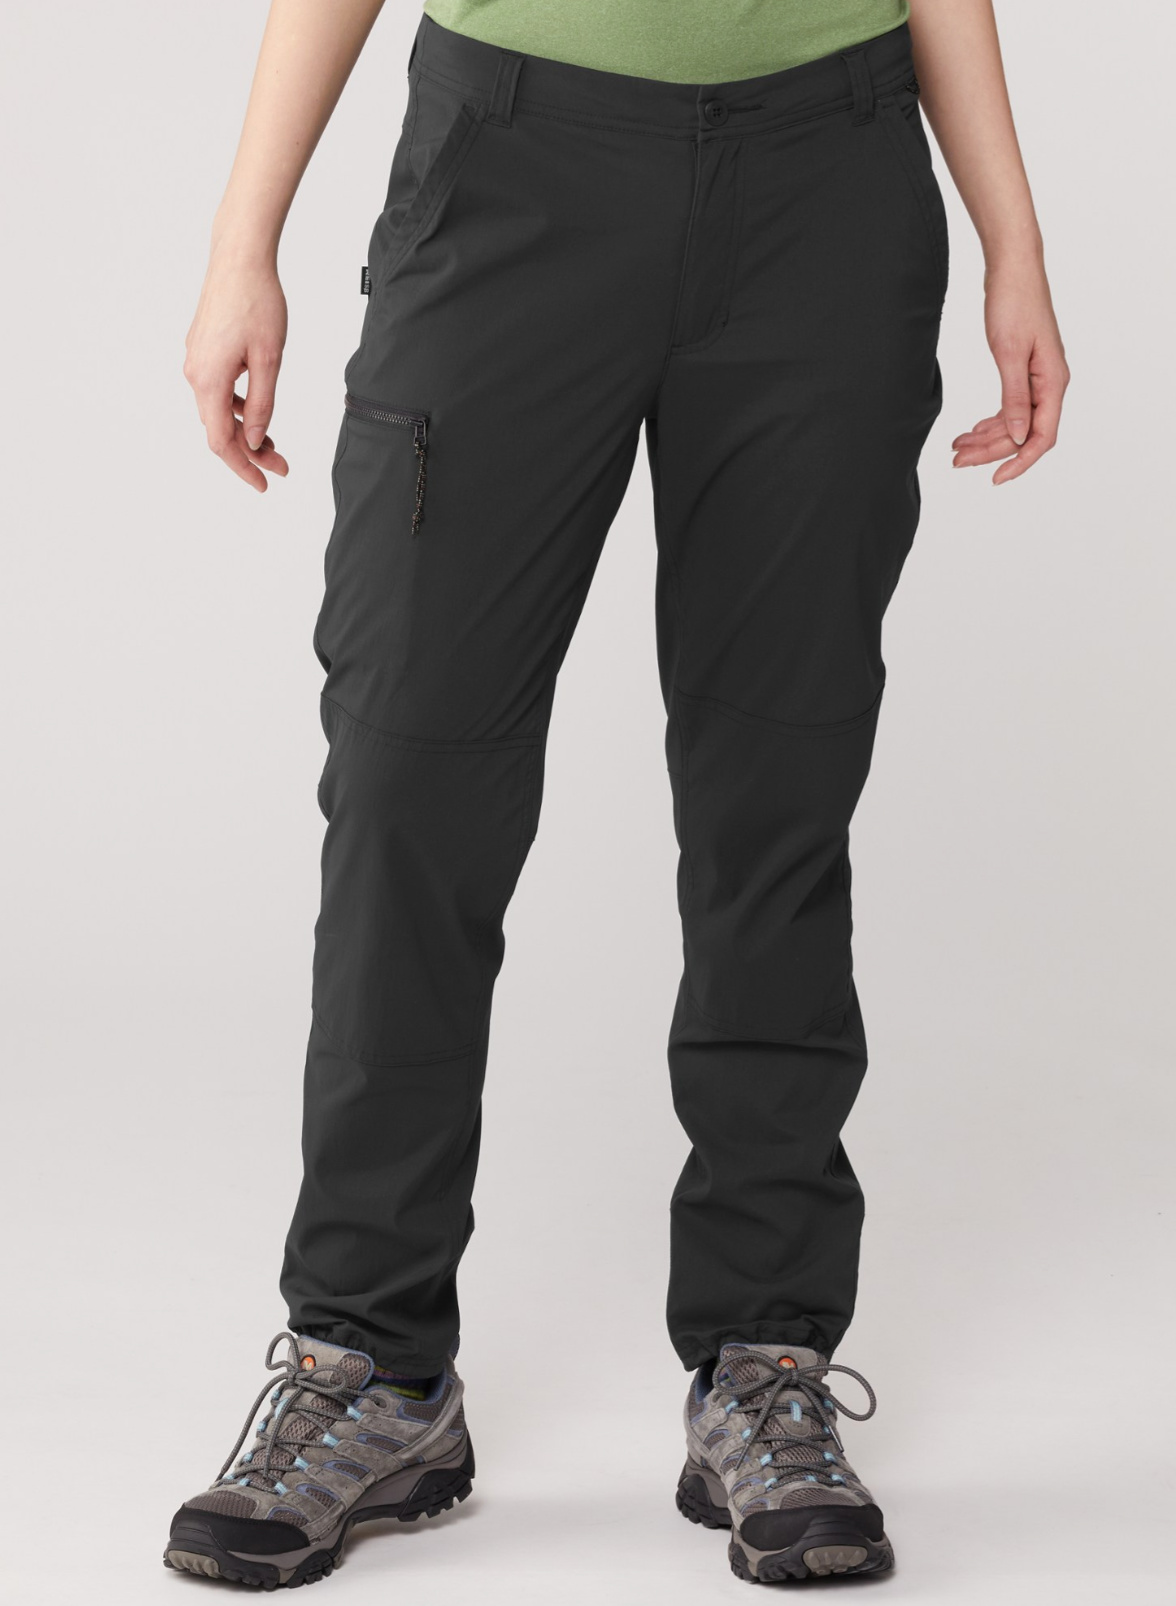 BALEAF Women's Capri Pants Quick Dry UPF 50+ Travel Hiking Capris Zip  Pockets